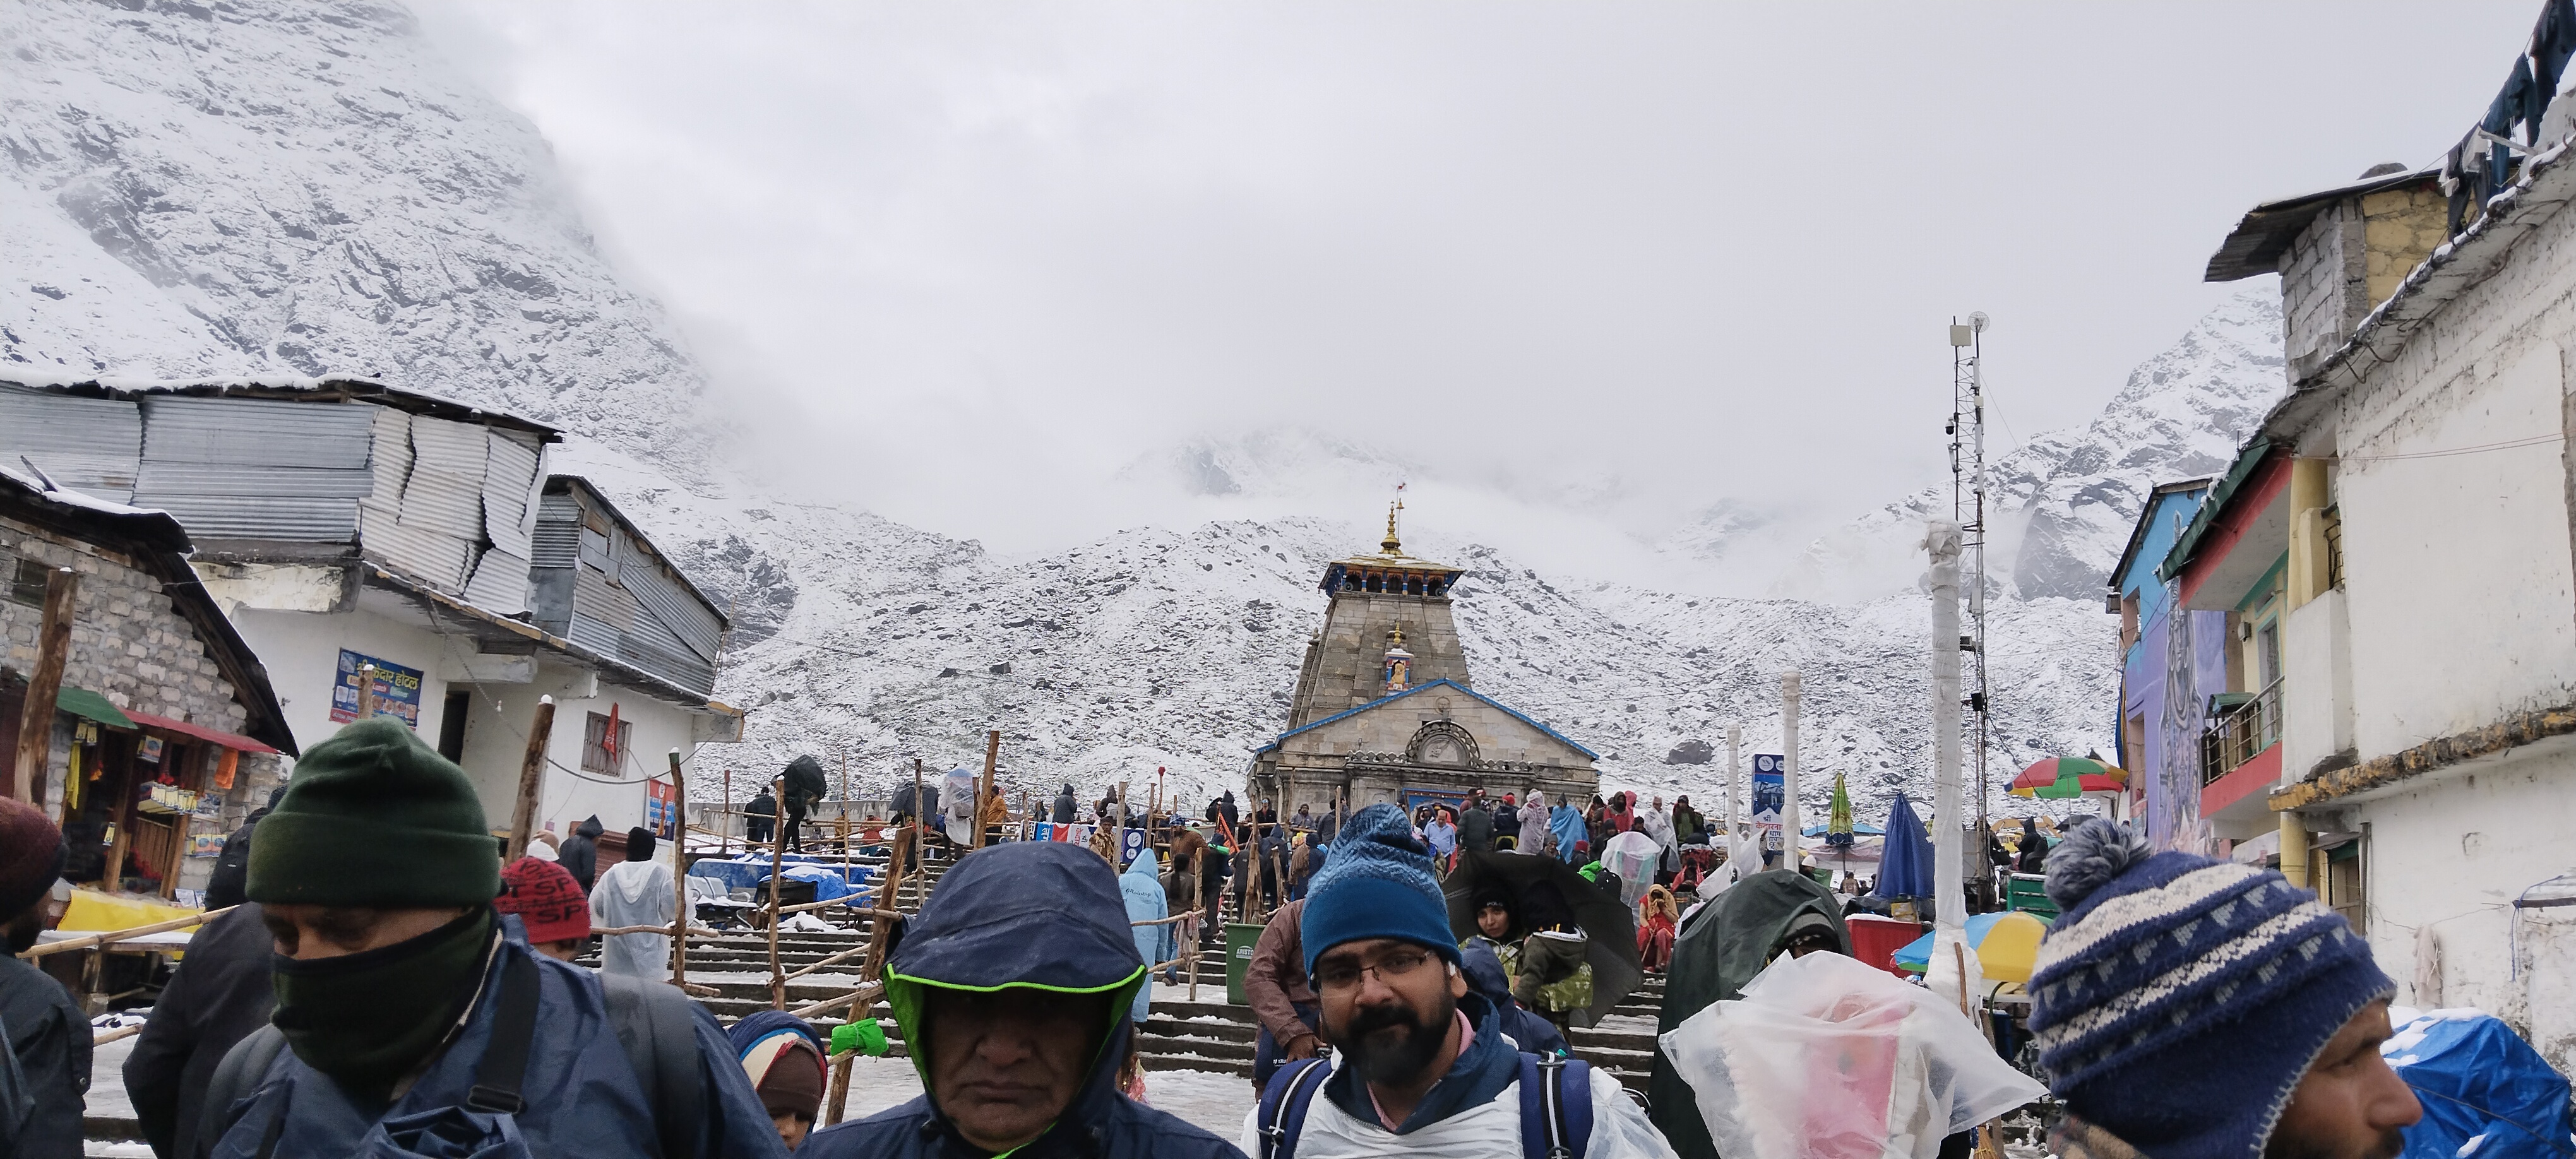 kedarnath trek from nepal